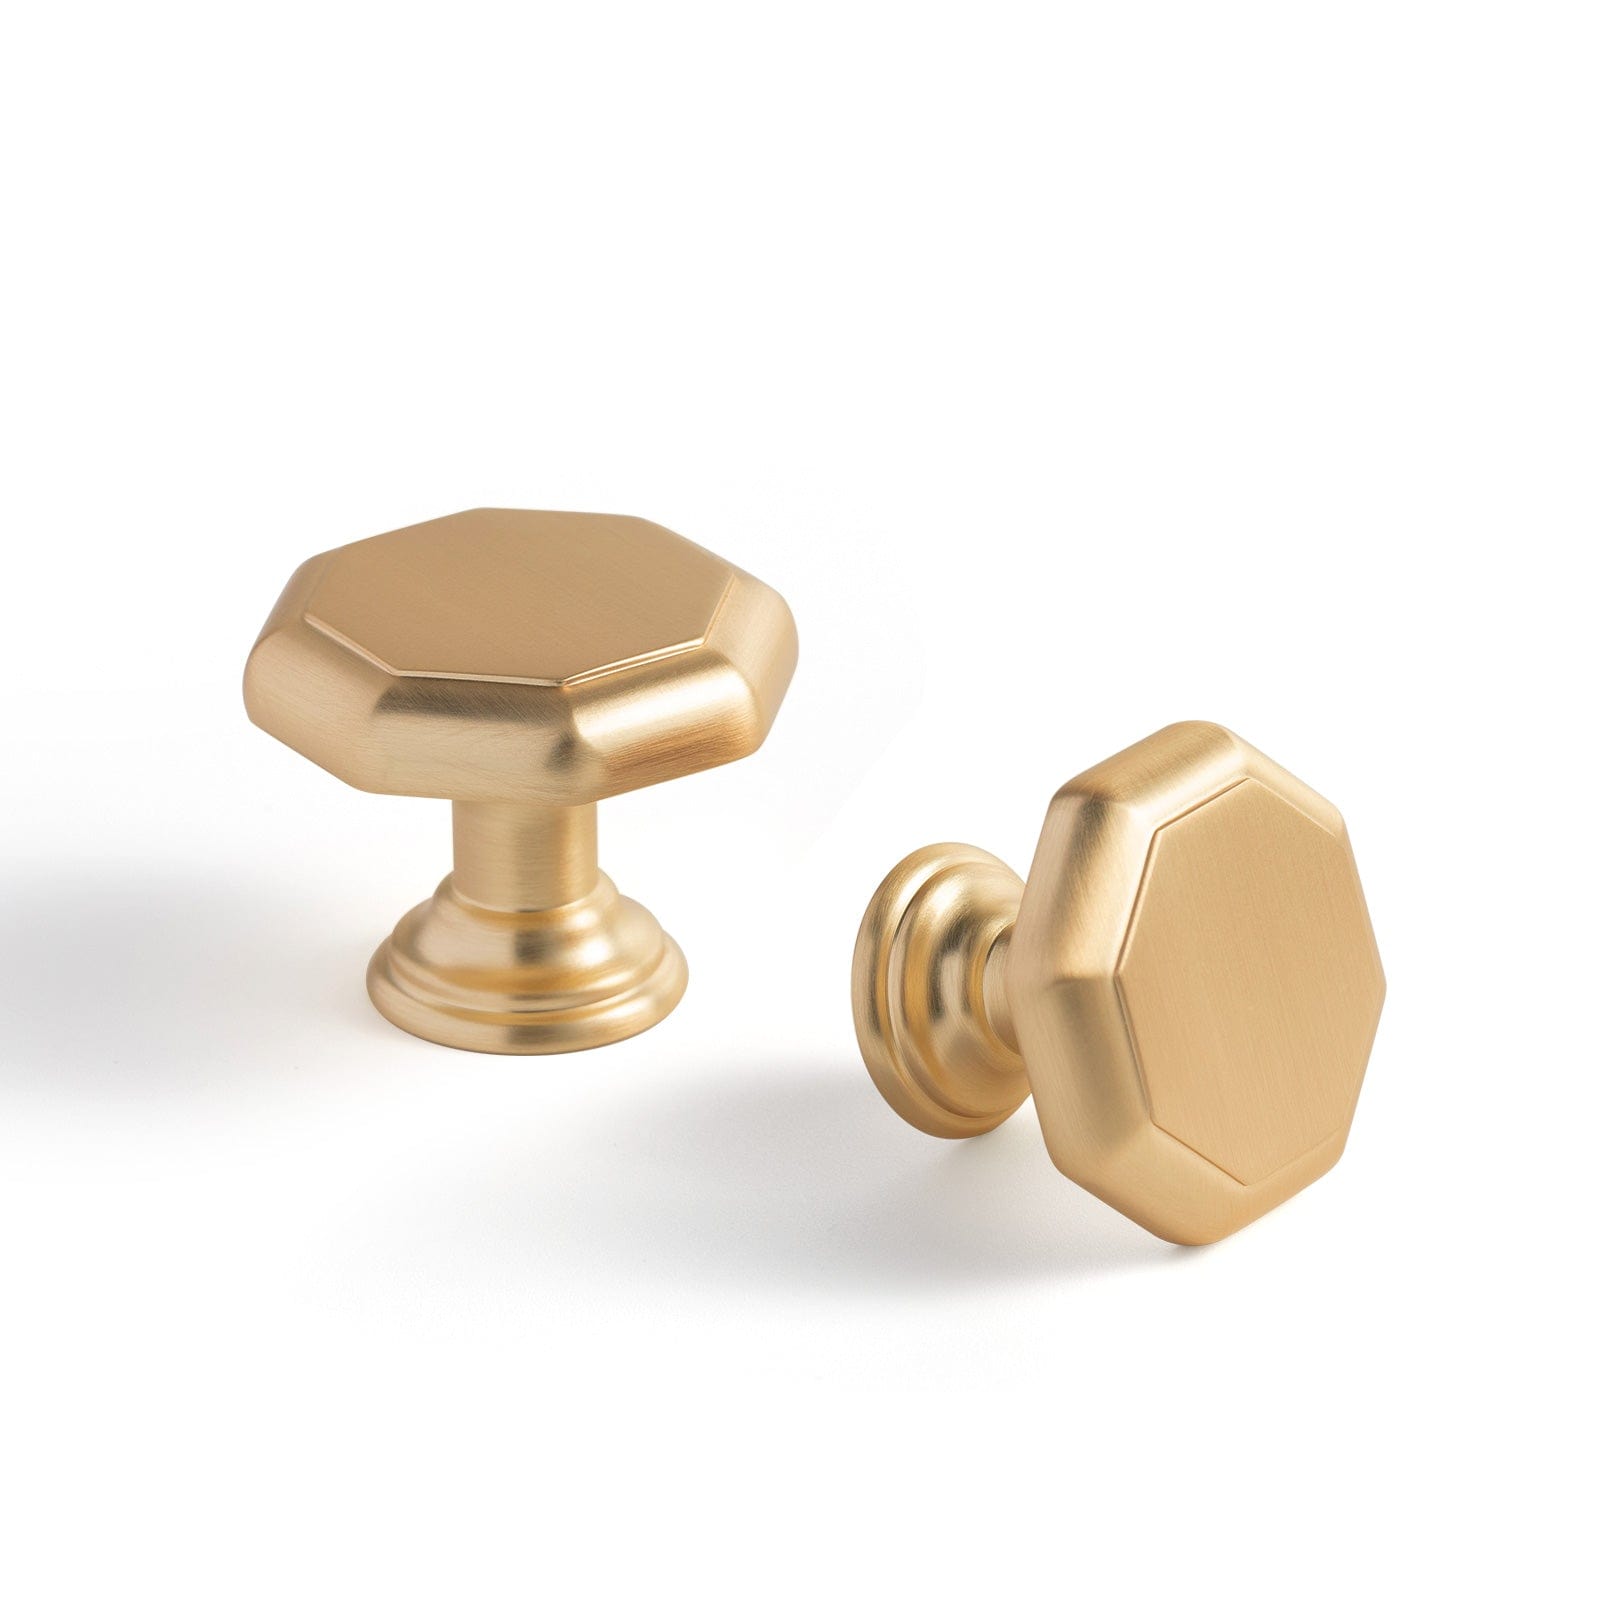 Goo-Ki Champagne Bronze / Knob / 6 Pack Antique Brass Cabinet Pulls Affordable Luxury Vintage Drawer Knobs for Kitchen